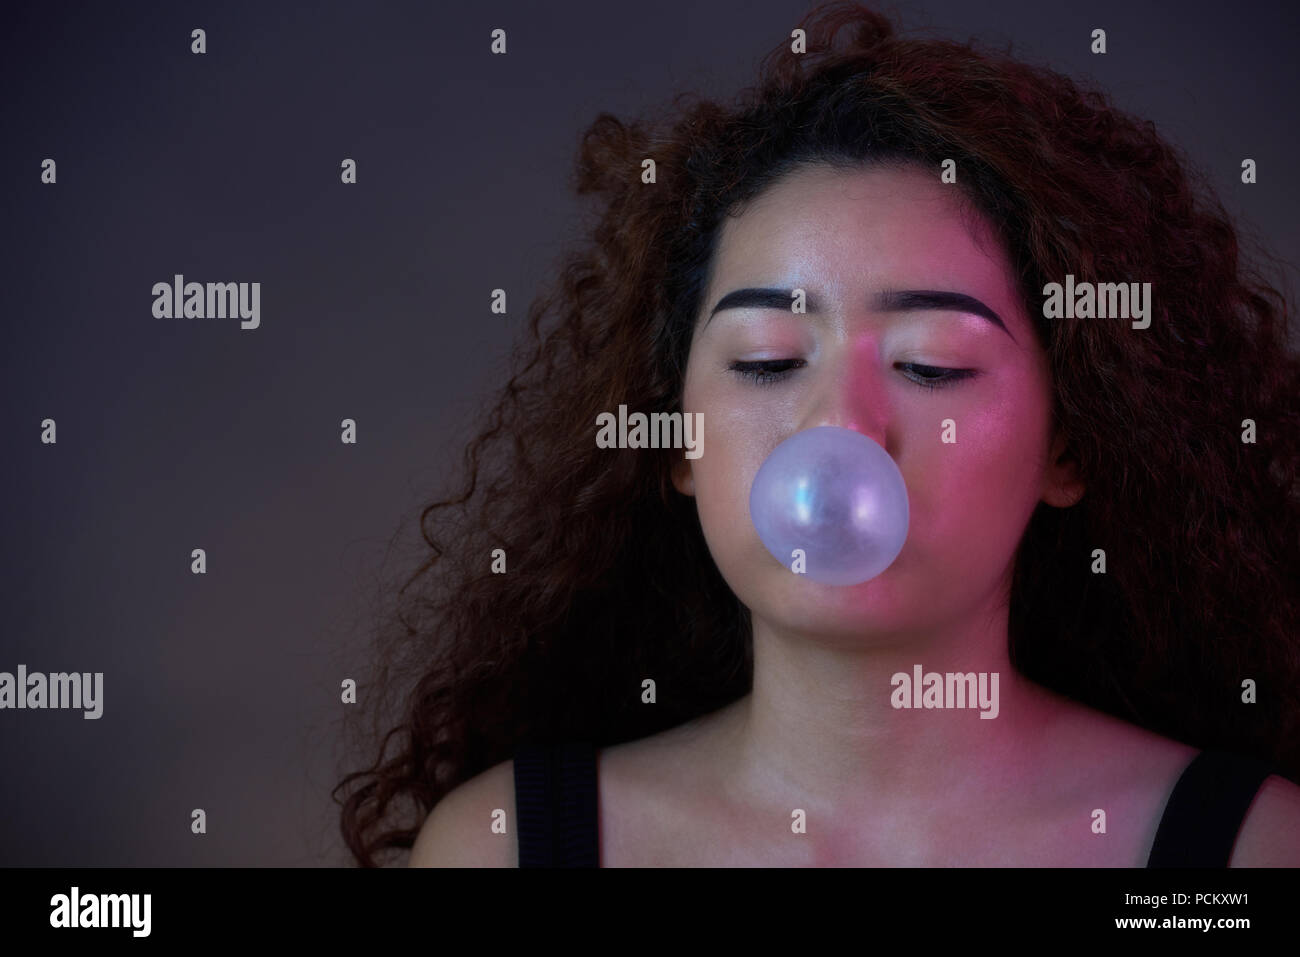 Teenager girl blow bubble gum ball close-up portrait Stock Photo